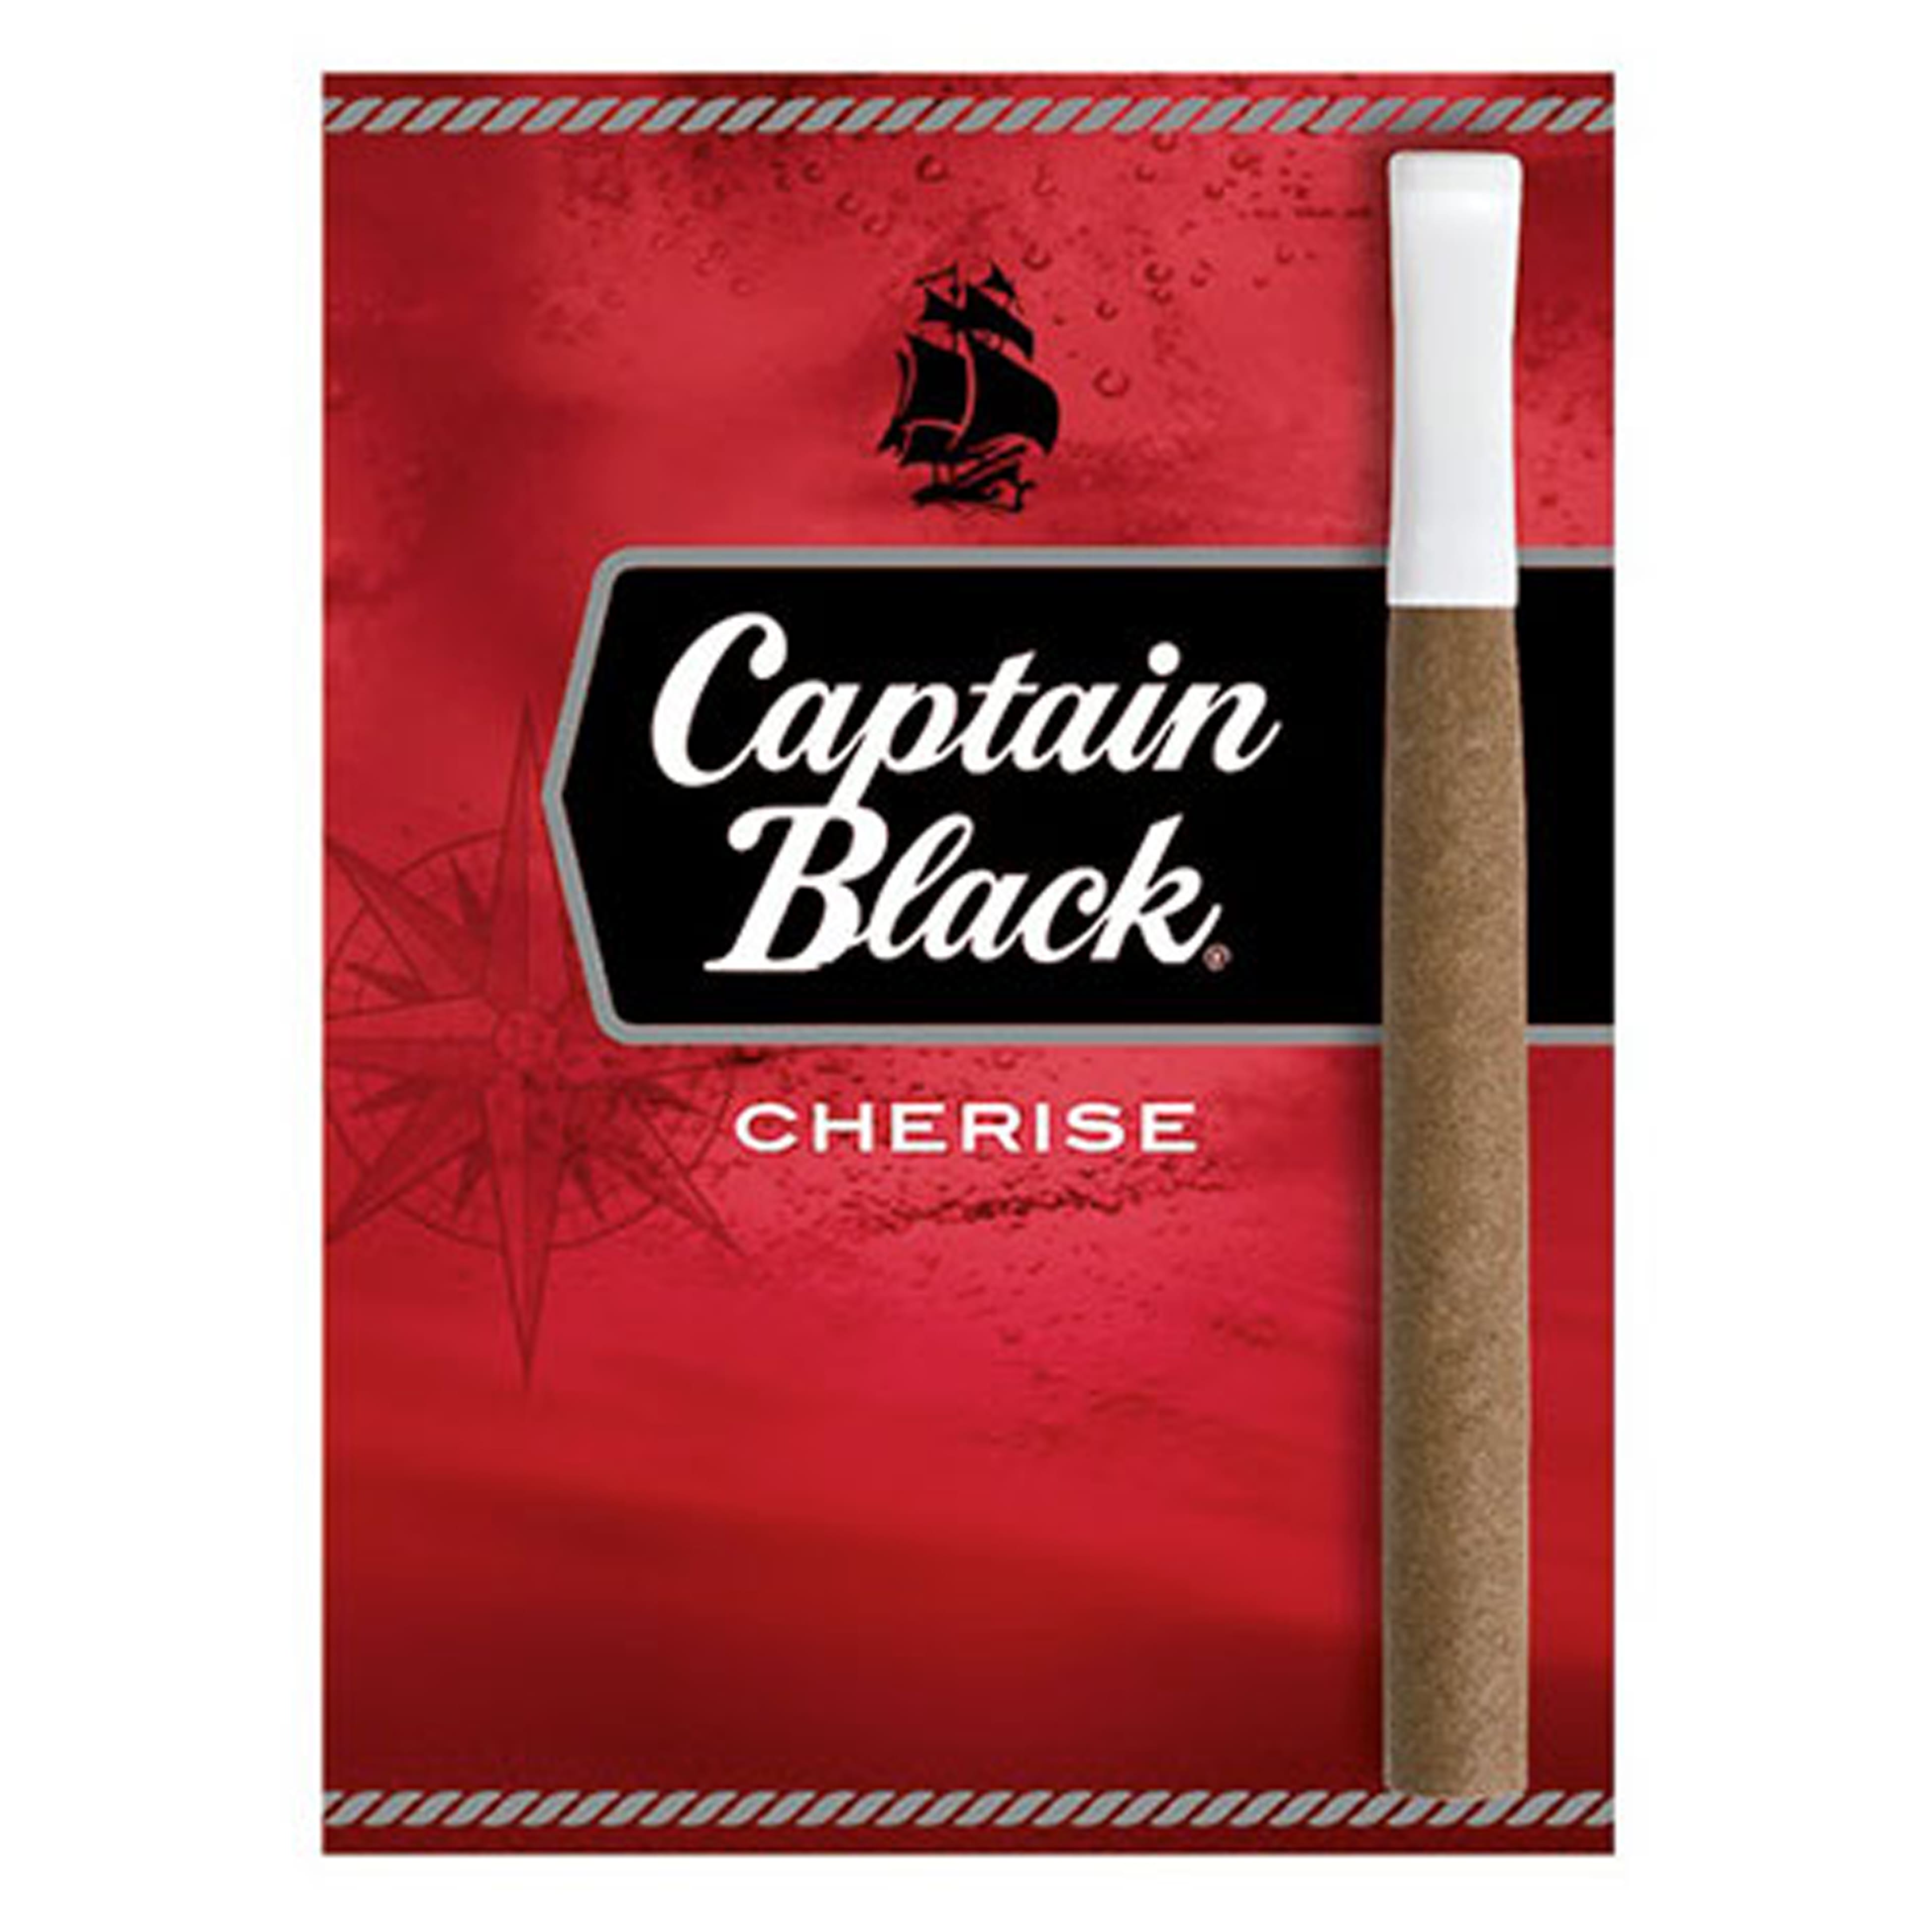 Captaincblack